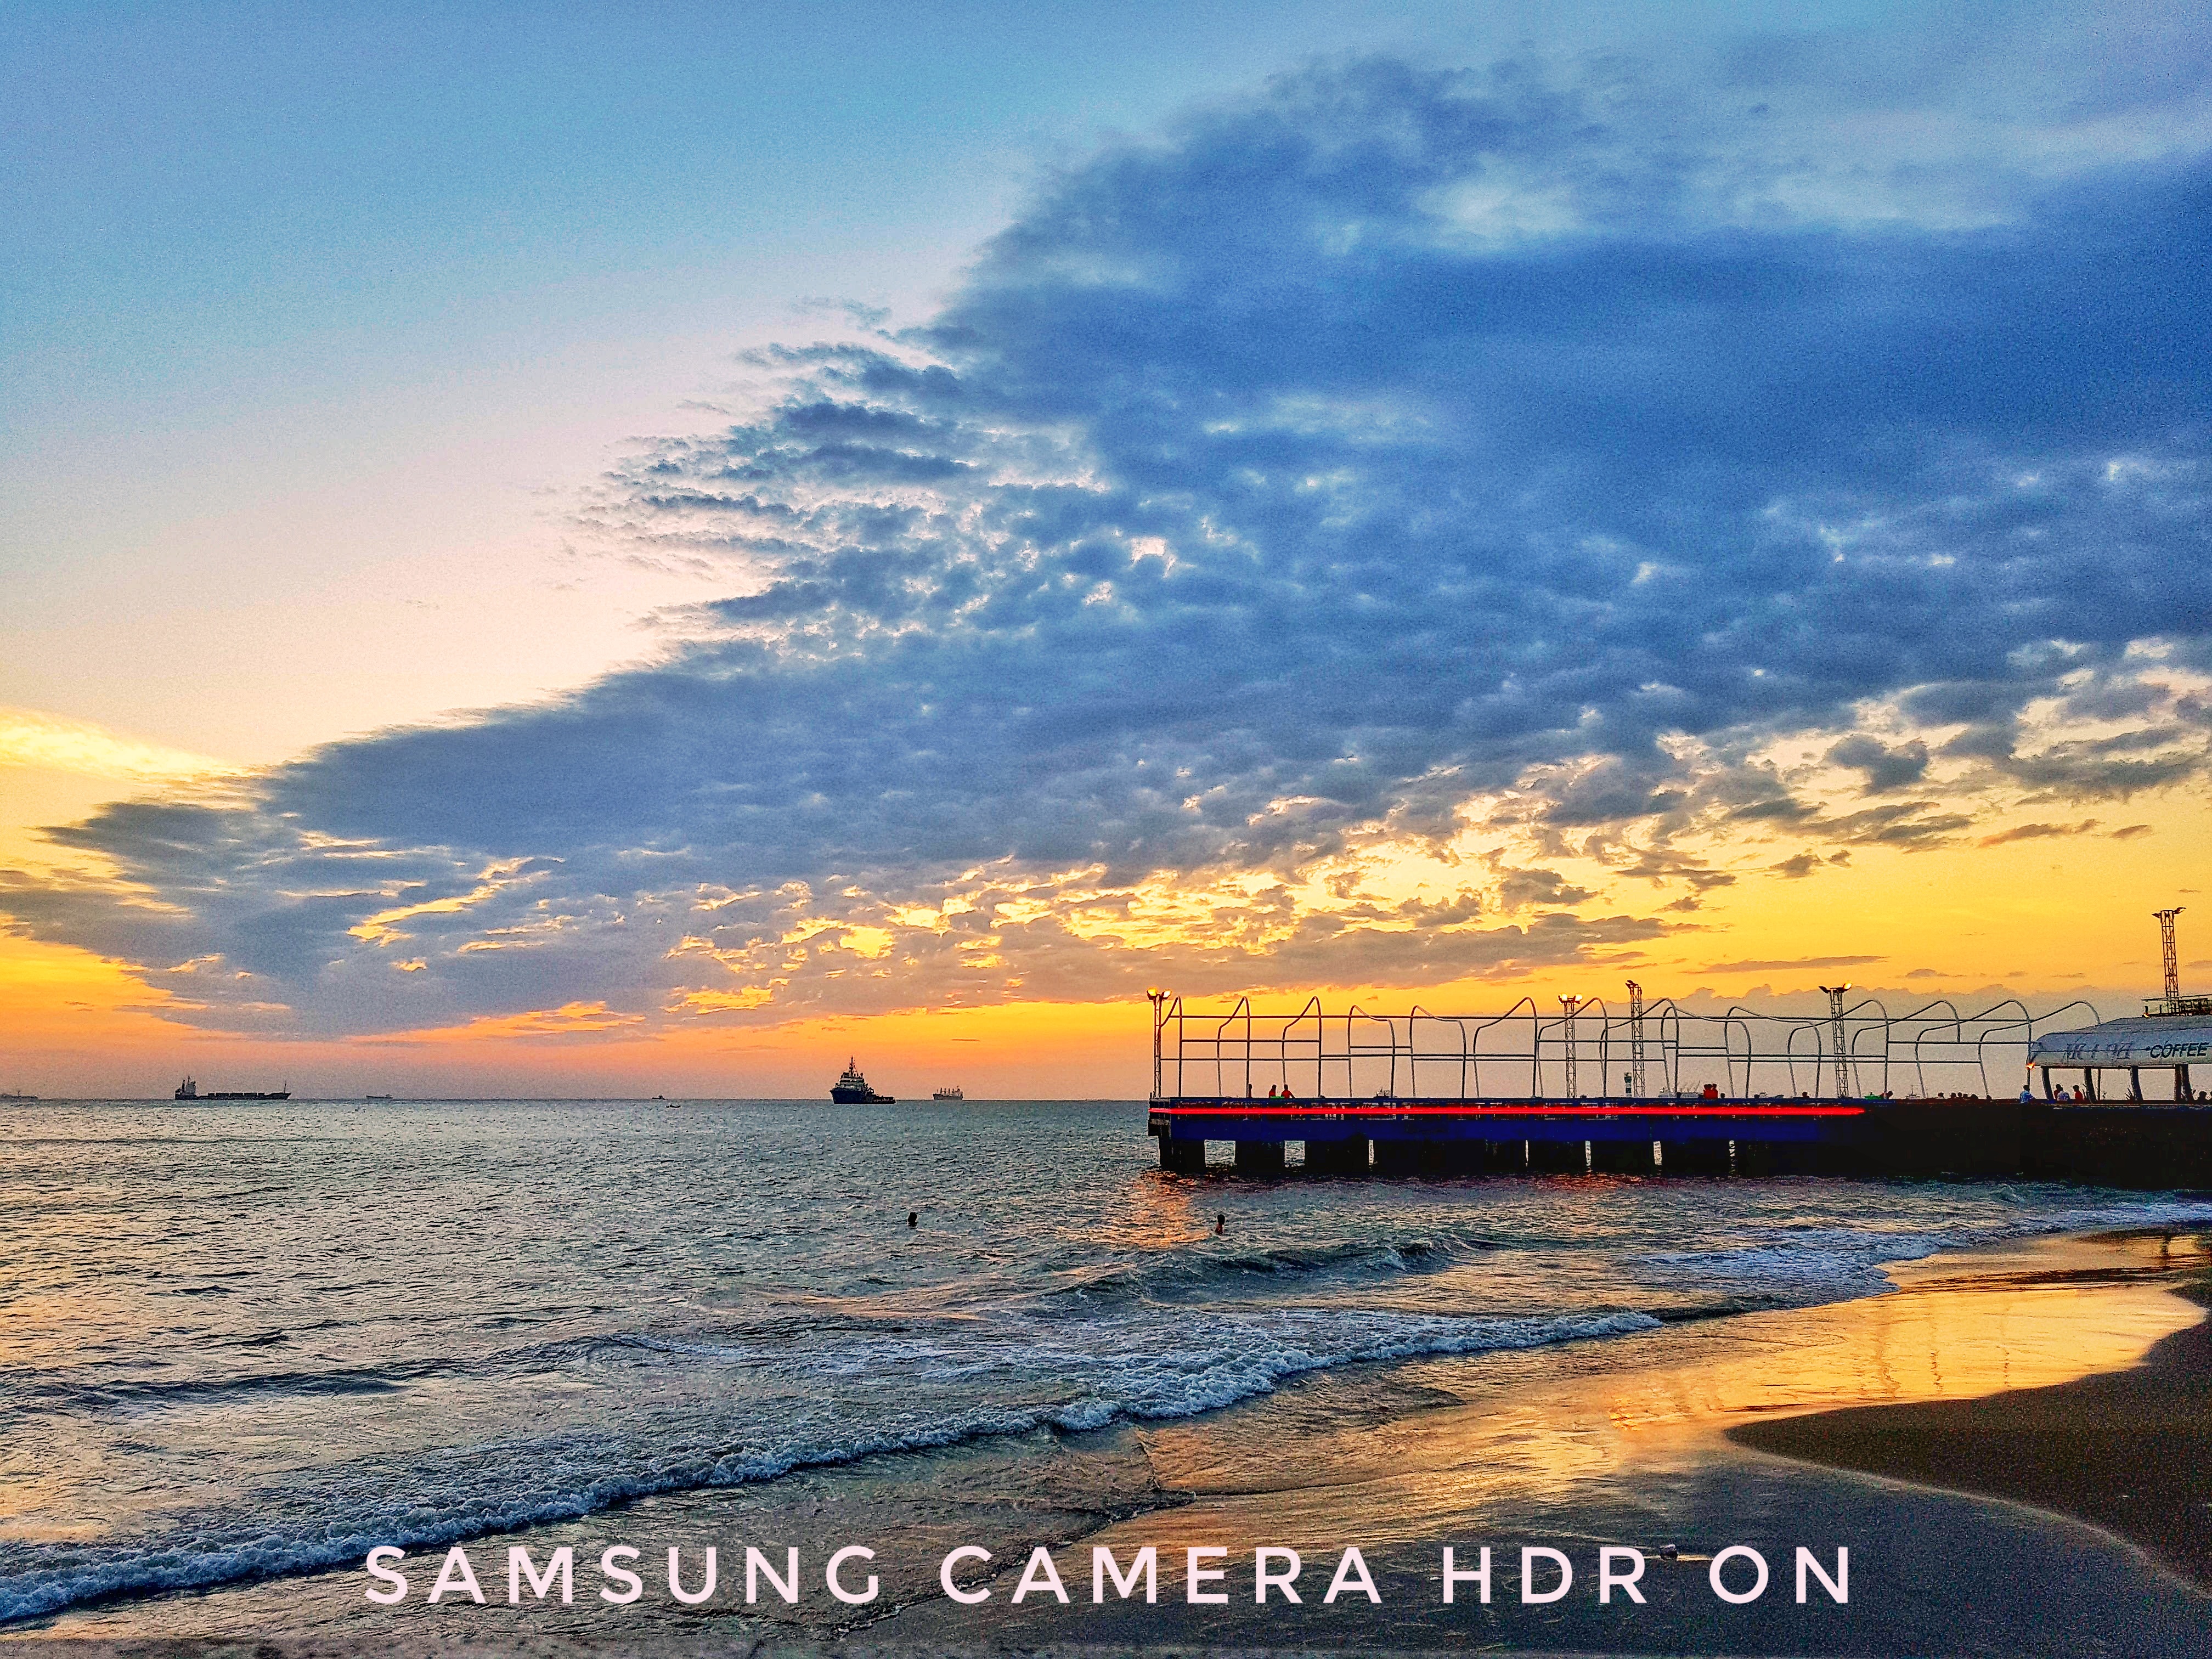 Samsung camera hdr on -01.jpeg